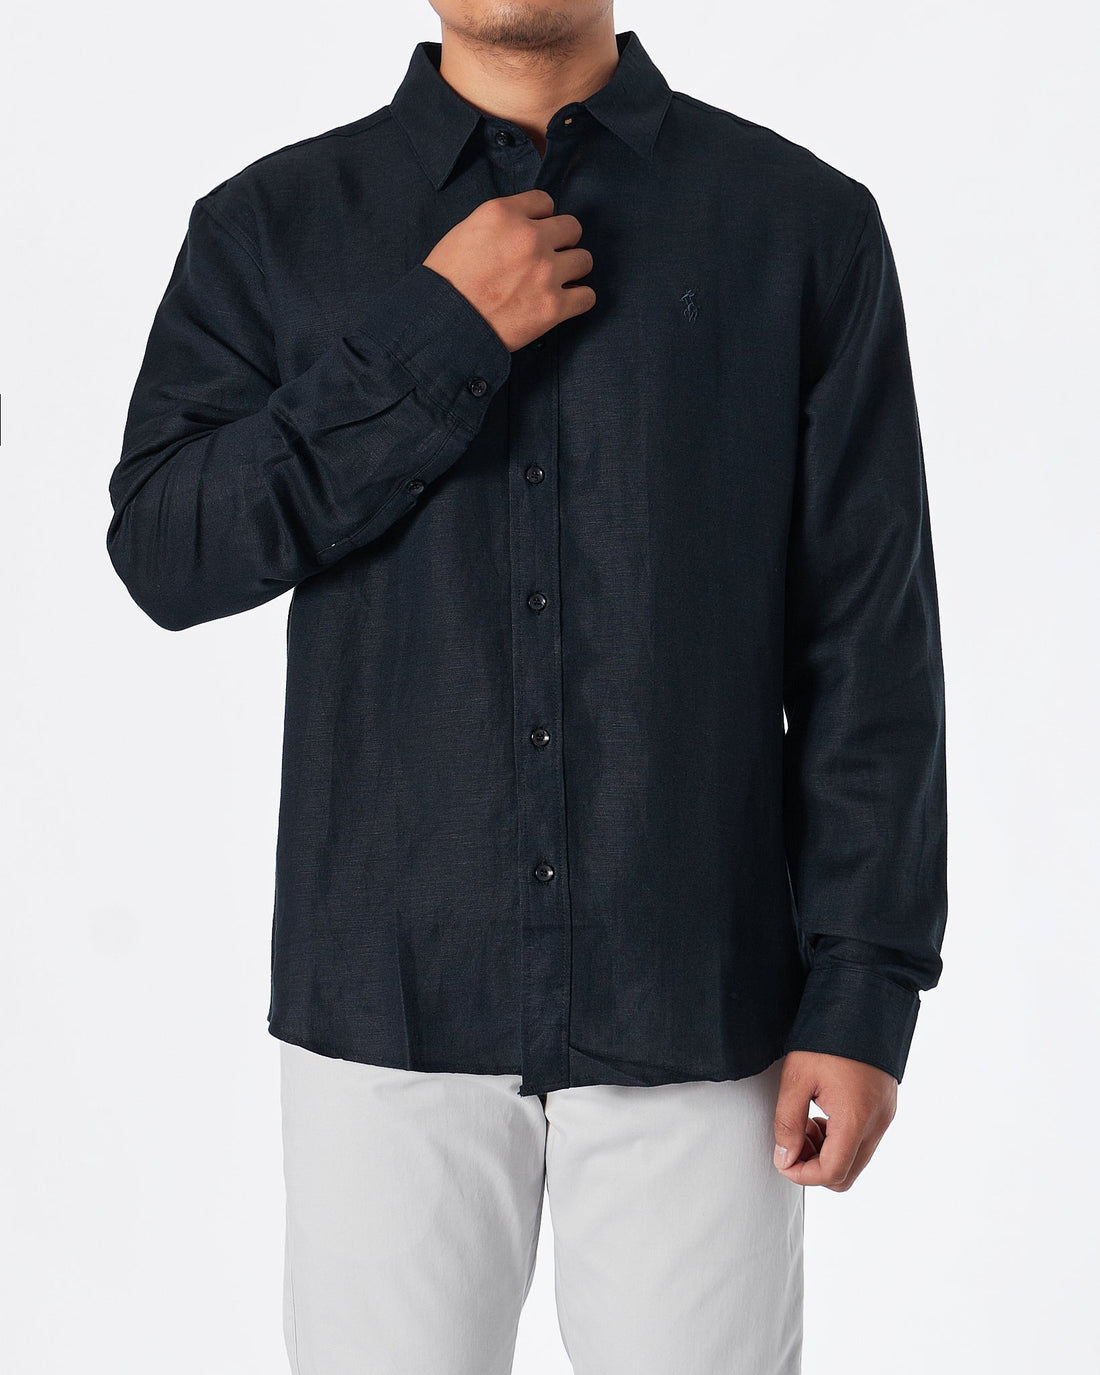 MOI OUTFIT-RL Cotton Men Black Shirts Long Sleeve 30.90